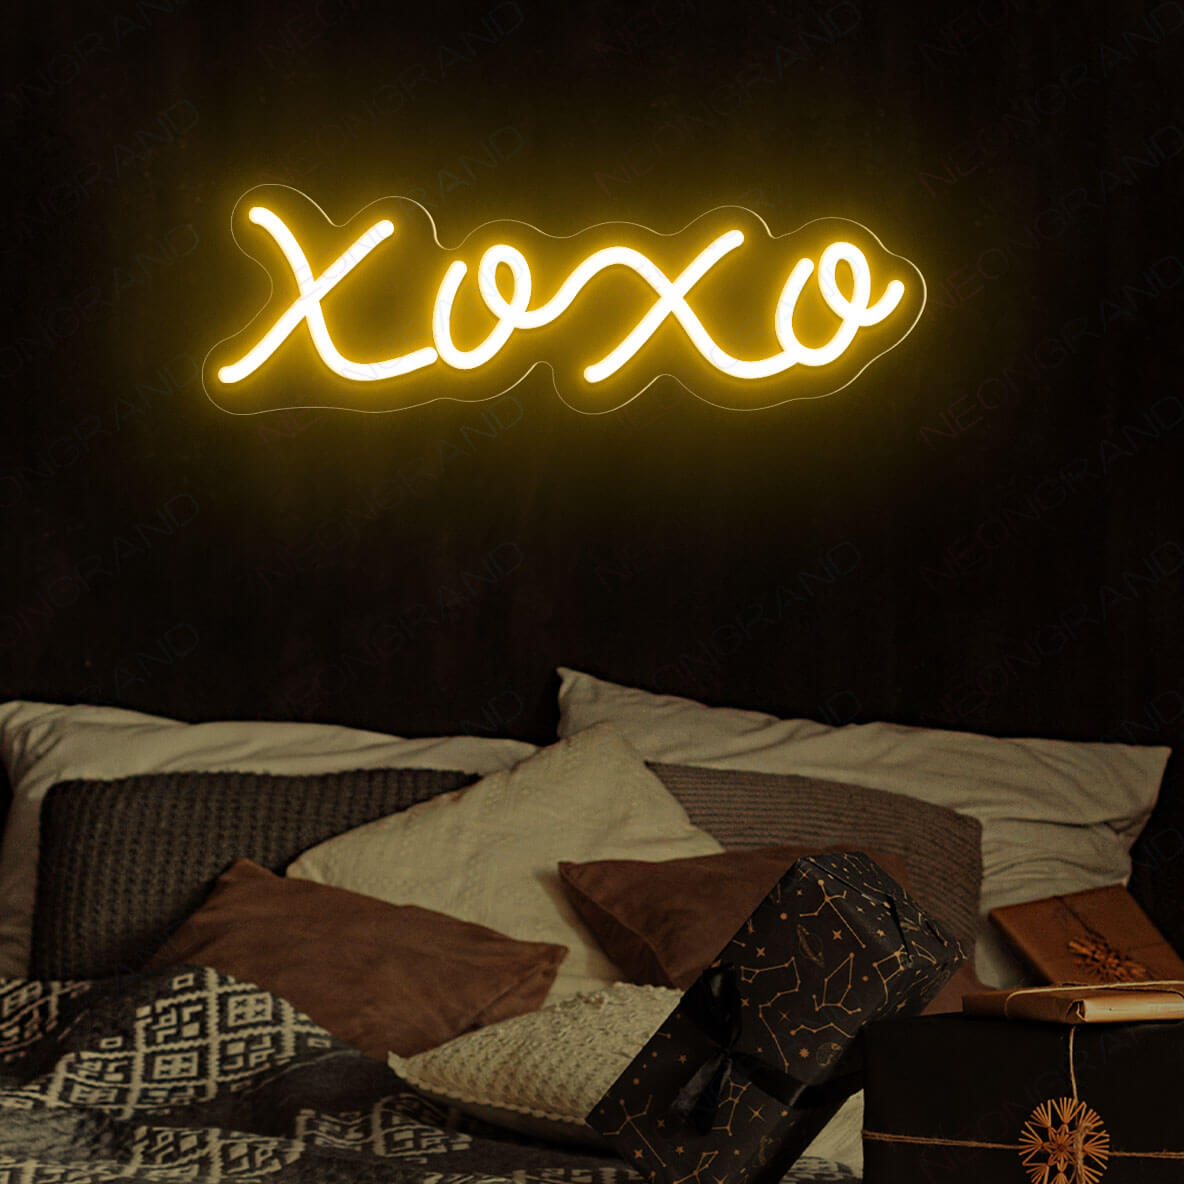 XOXO Neon Sign Hugs And Kisses Love Led Light orange yellow wm